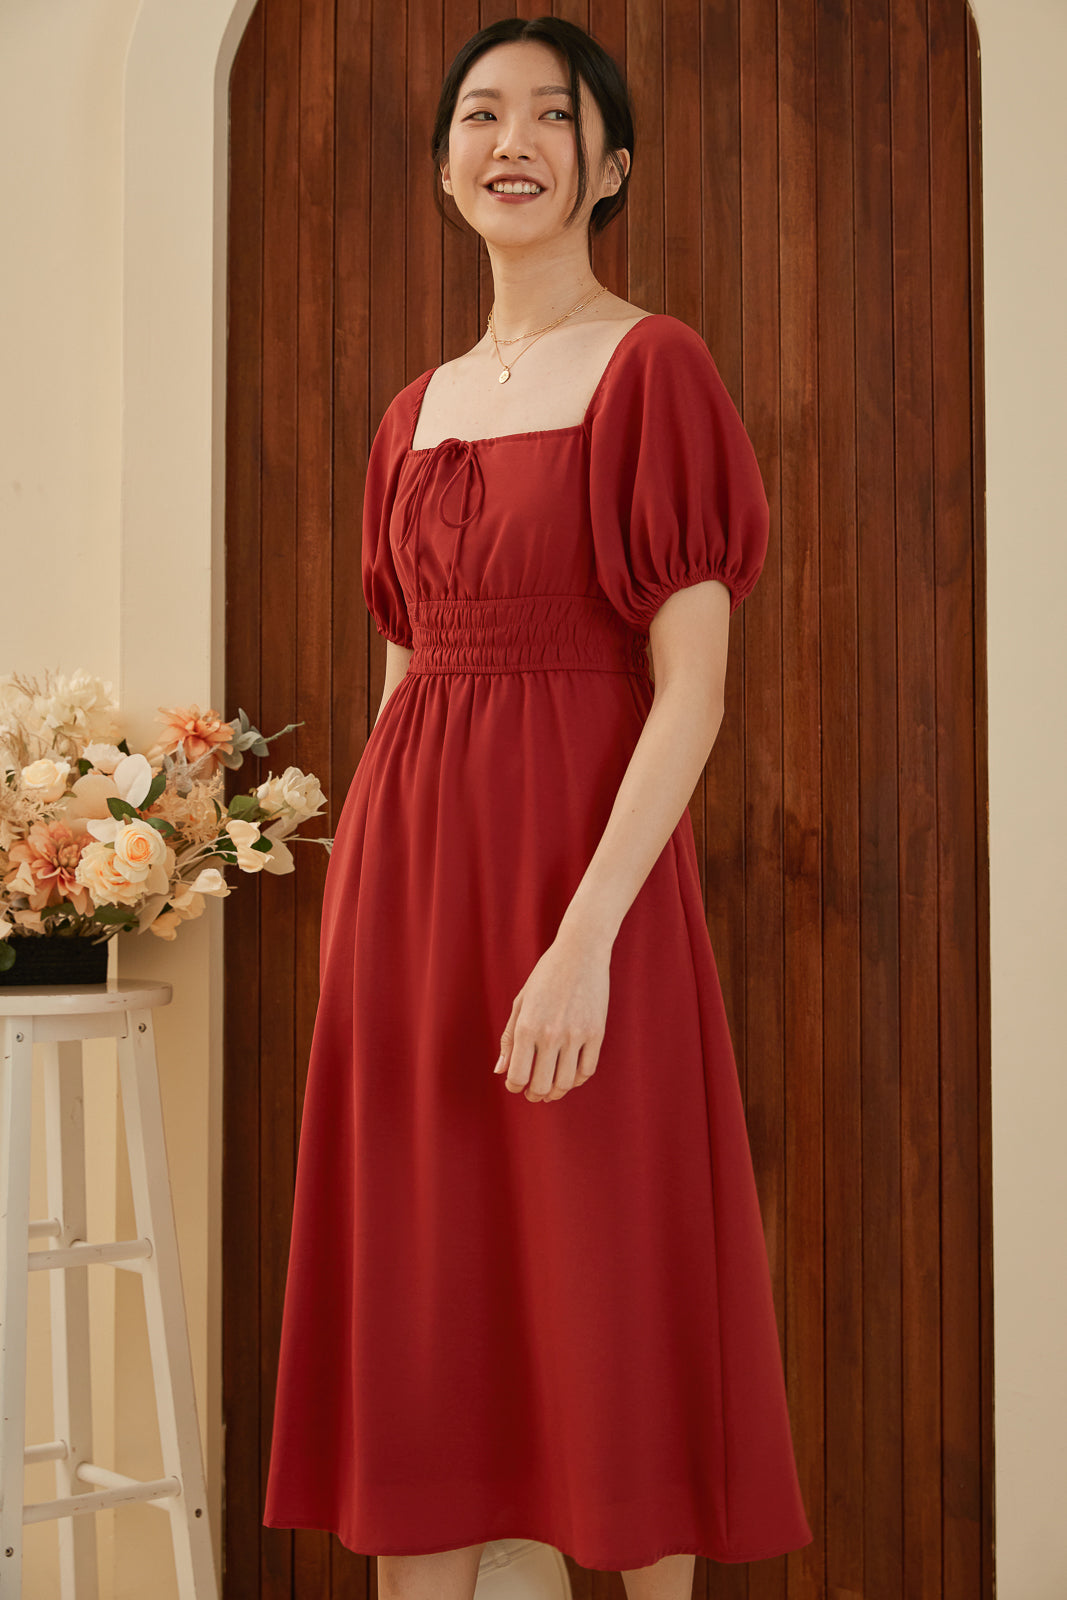 Goldilocks Smock-Waist Dress in Ruby Red